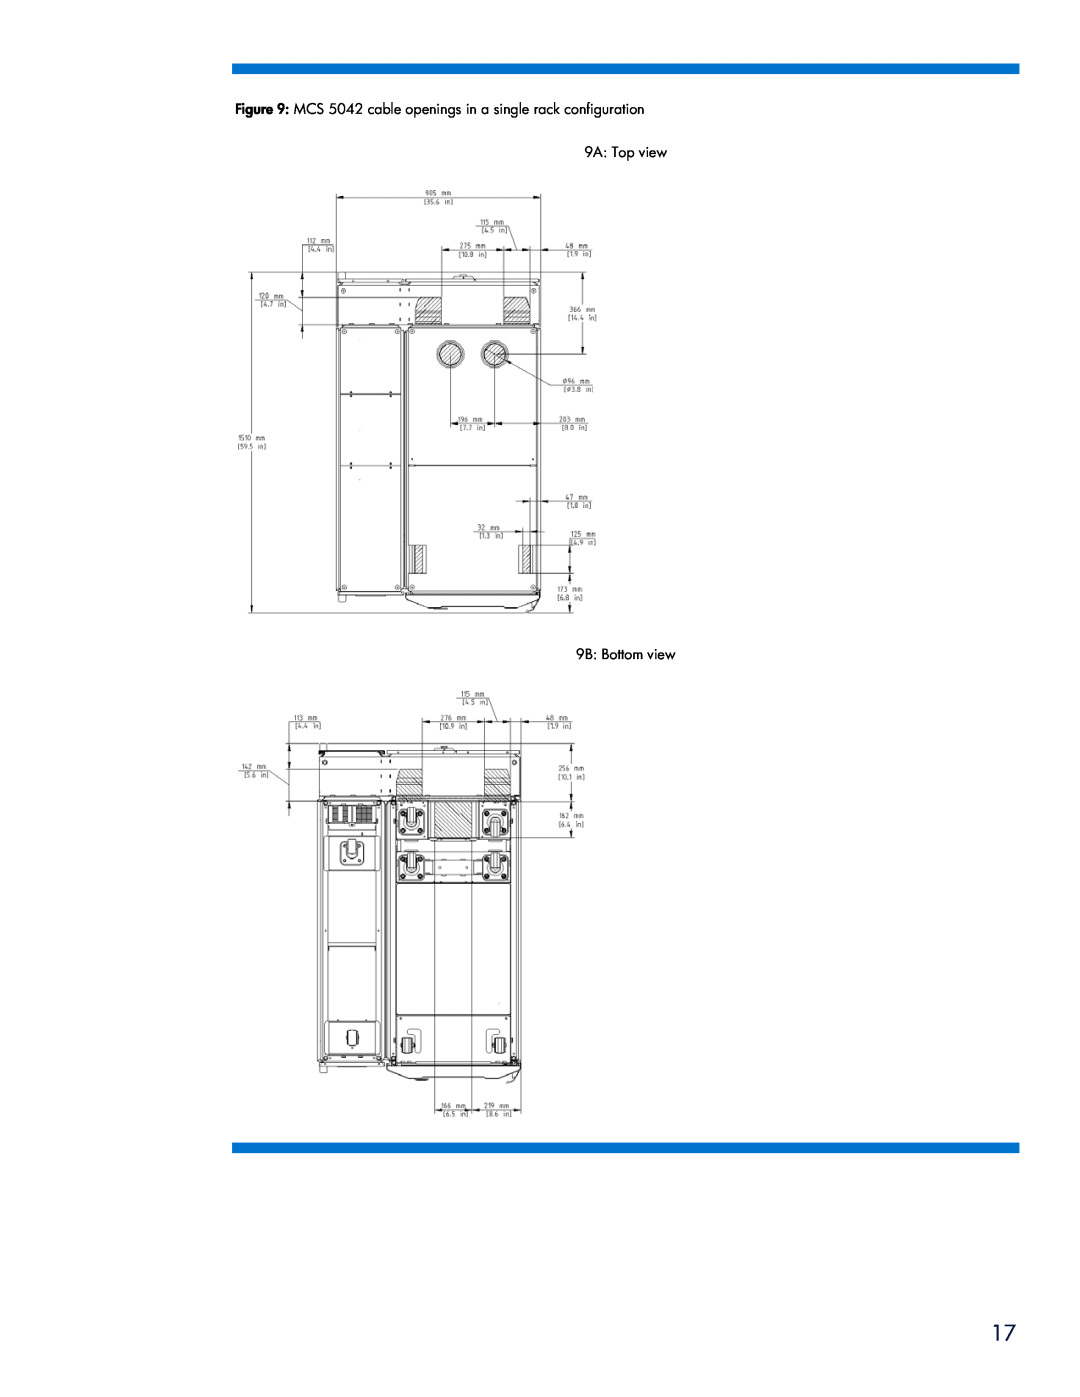 HP Modular Cooling System manual 9B Bottom view 